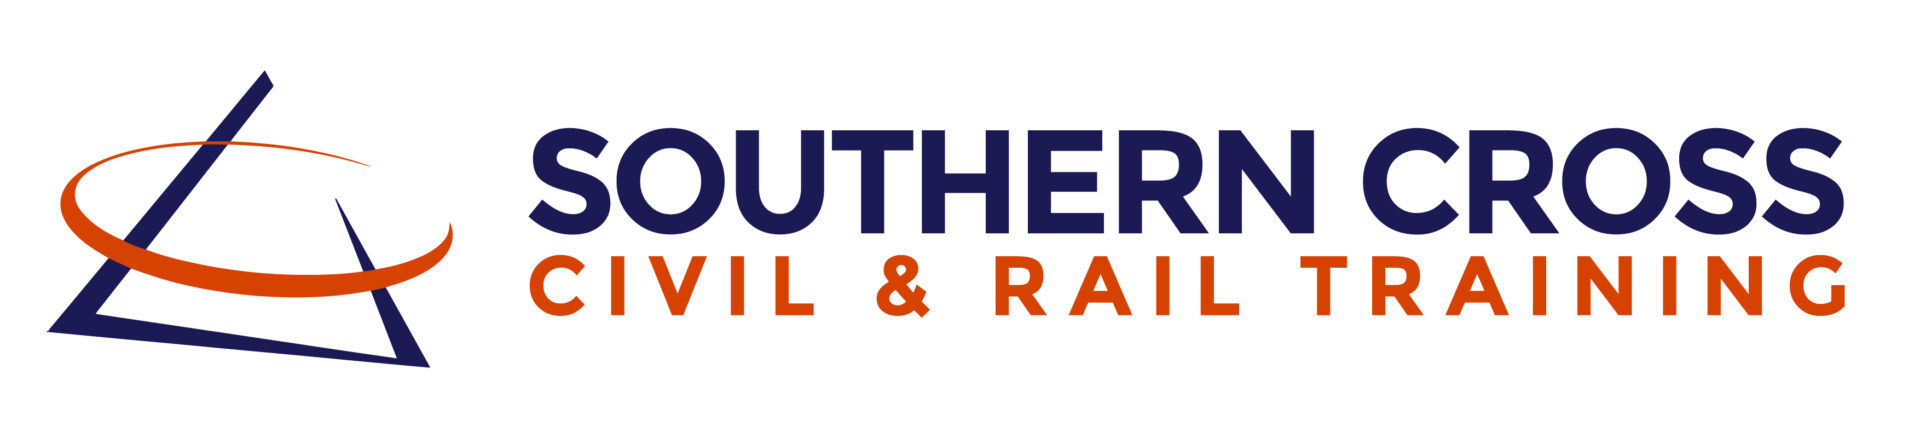 Southern Cross Civil & Rail Training